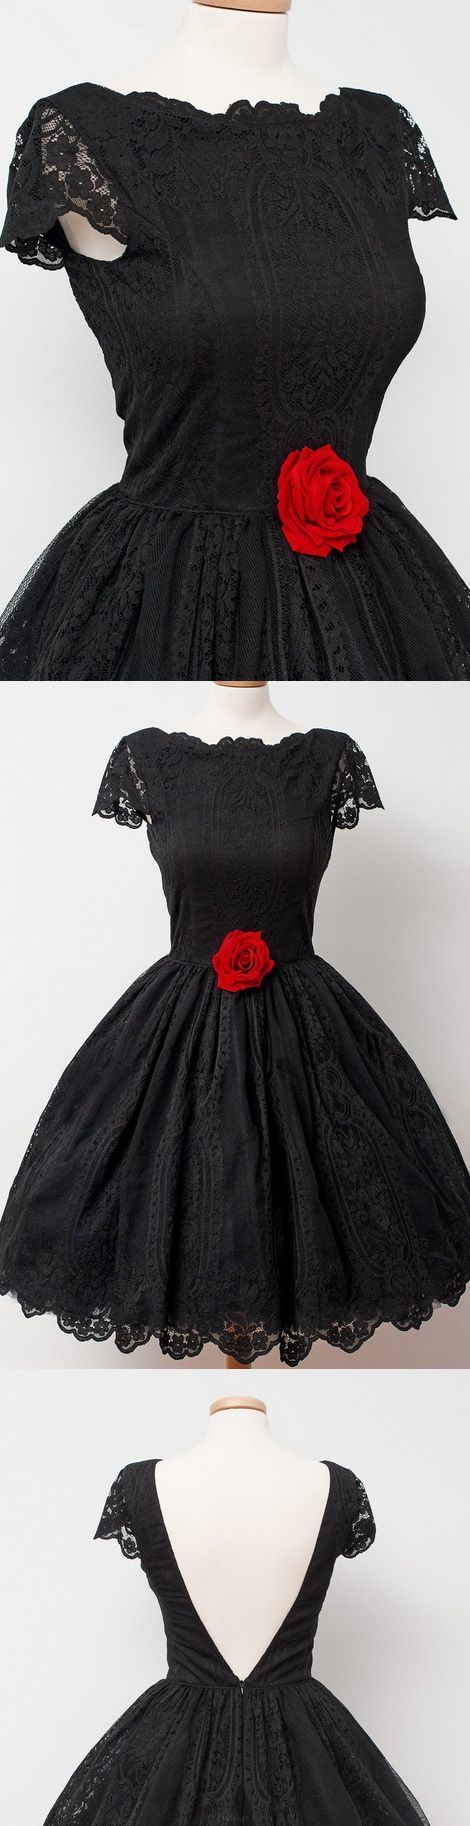 Short Prom Dresses, Black Short Prom Dresses M1724 on Luulla